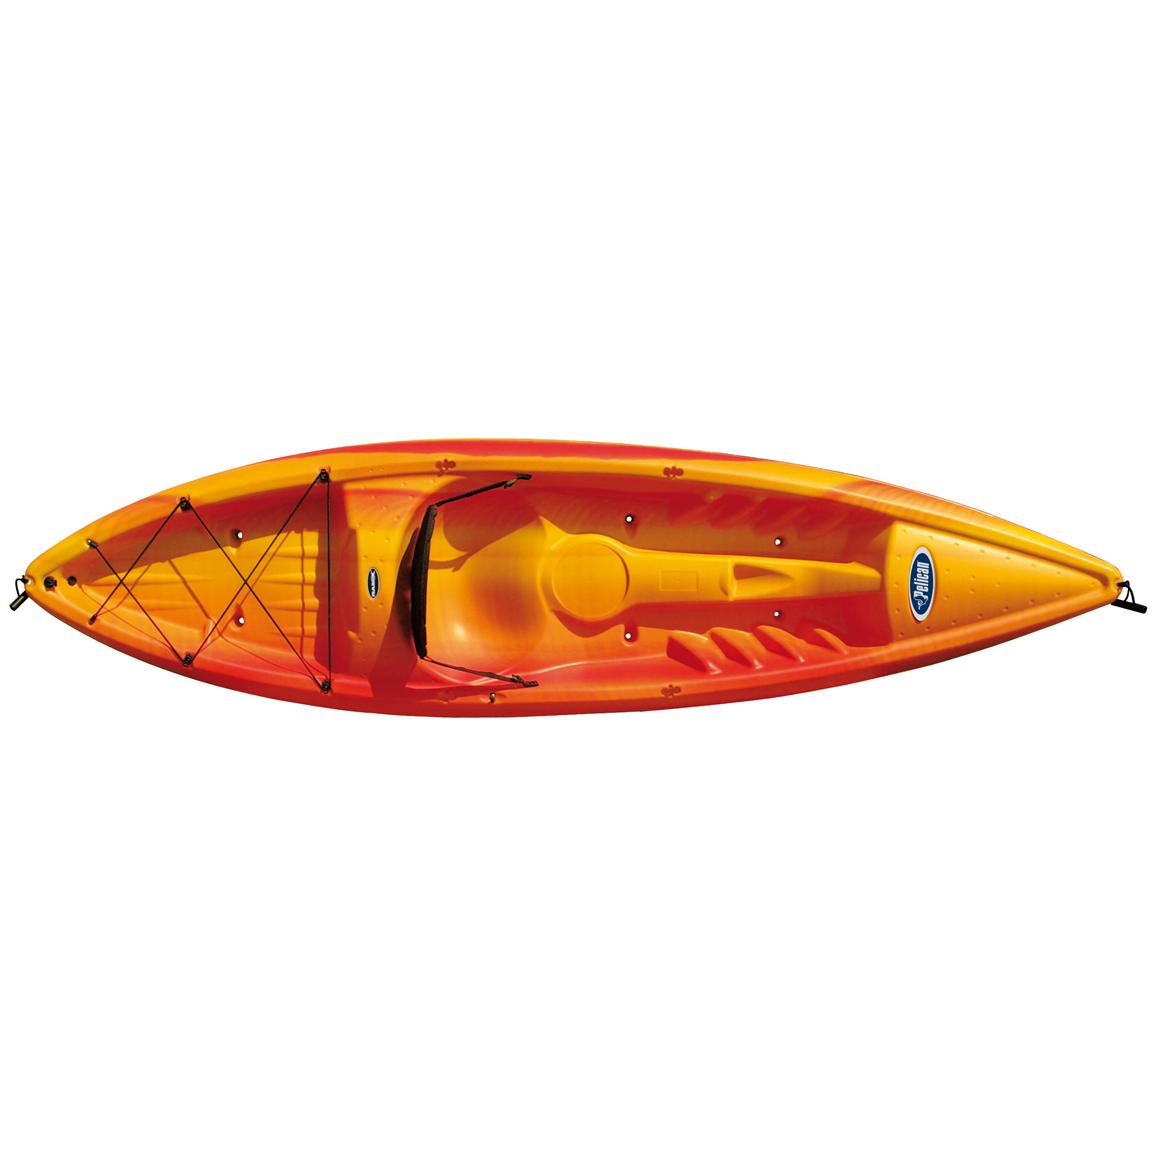 Pelican™ Apex 100 Kayak, Yellow / Green - 183754, Canoes & Kayaks at Sportsman's Guide